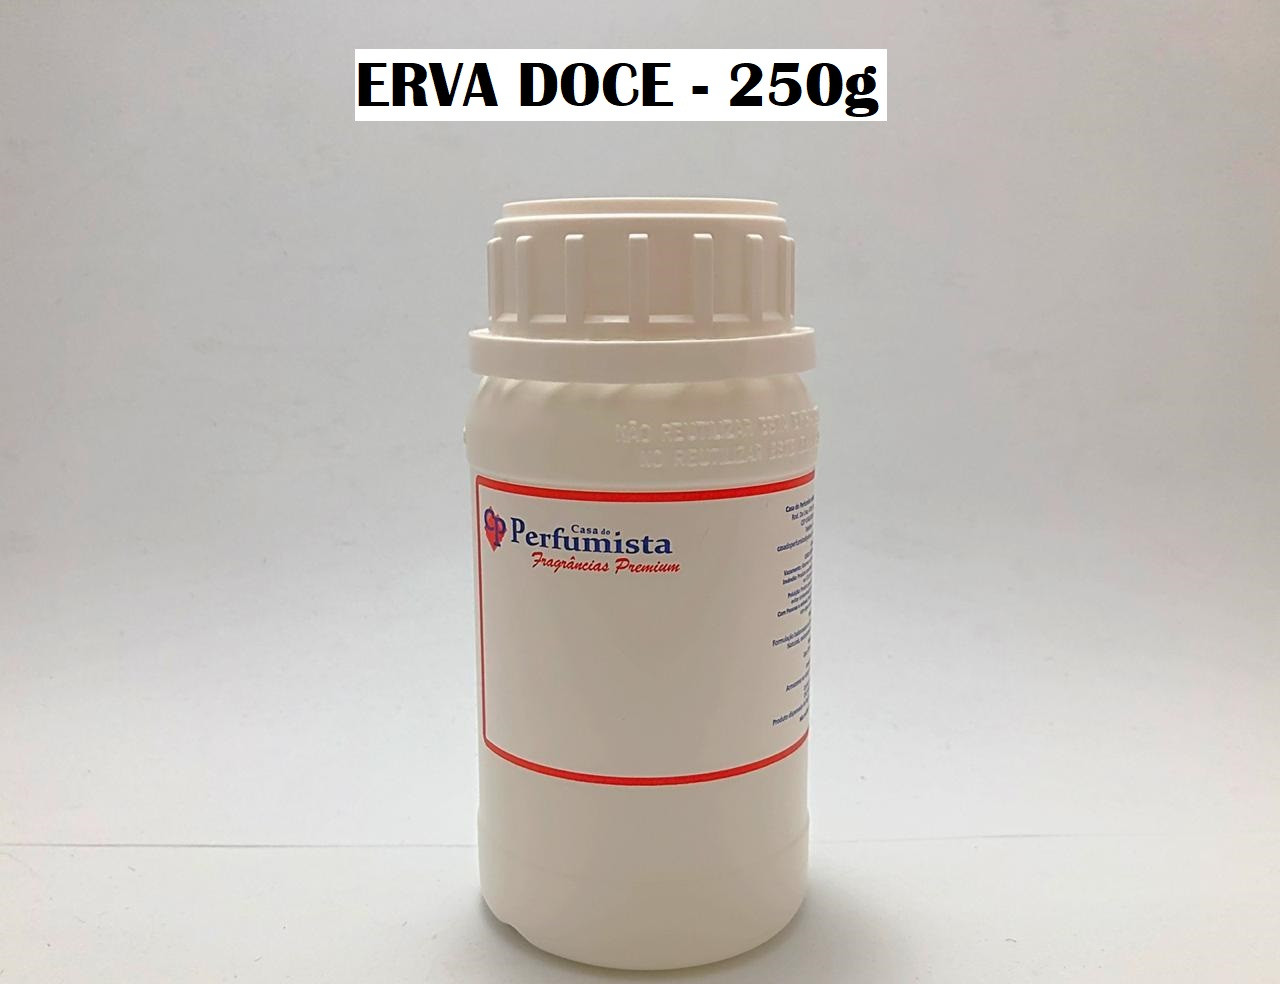 ERVA DOCE - 250g